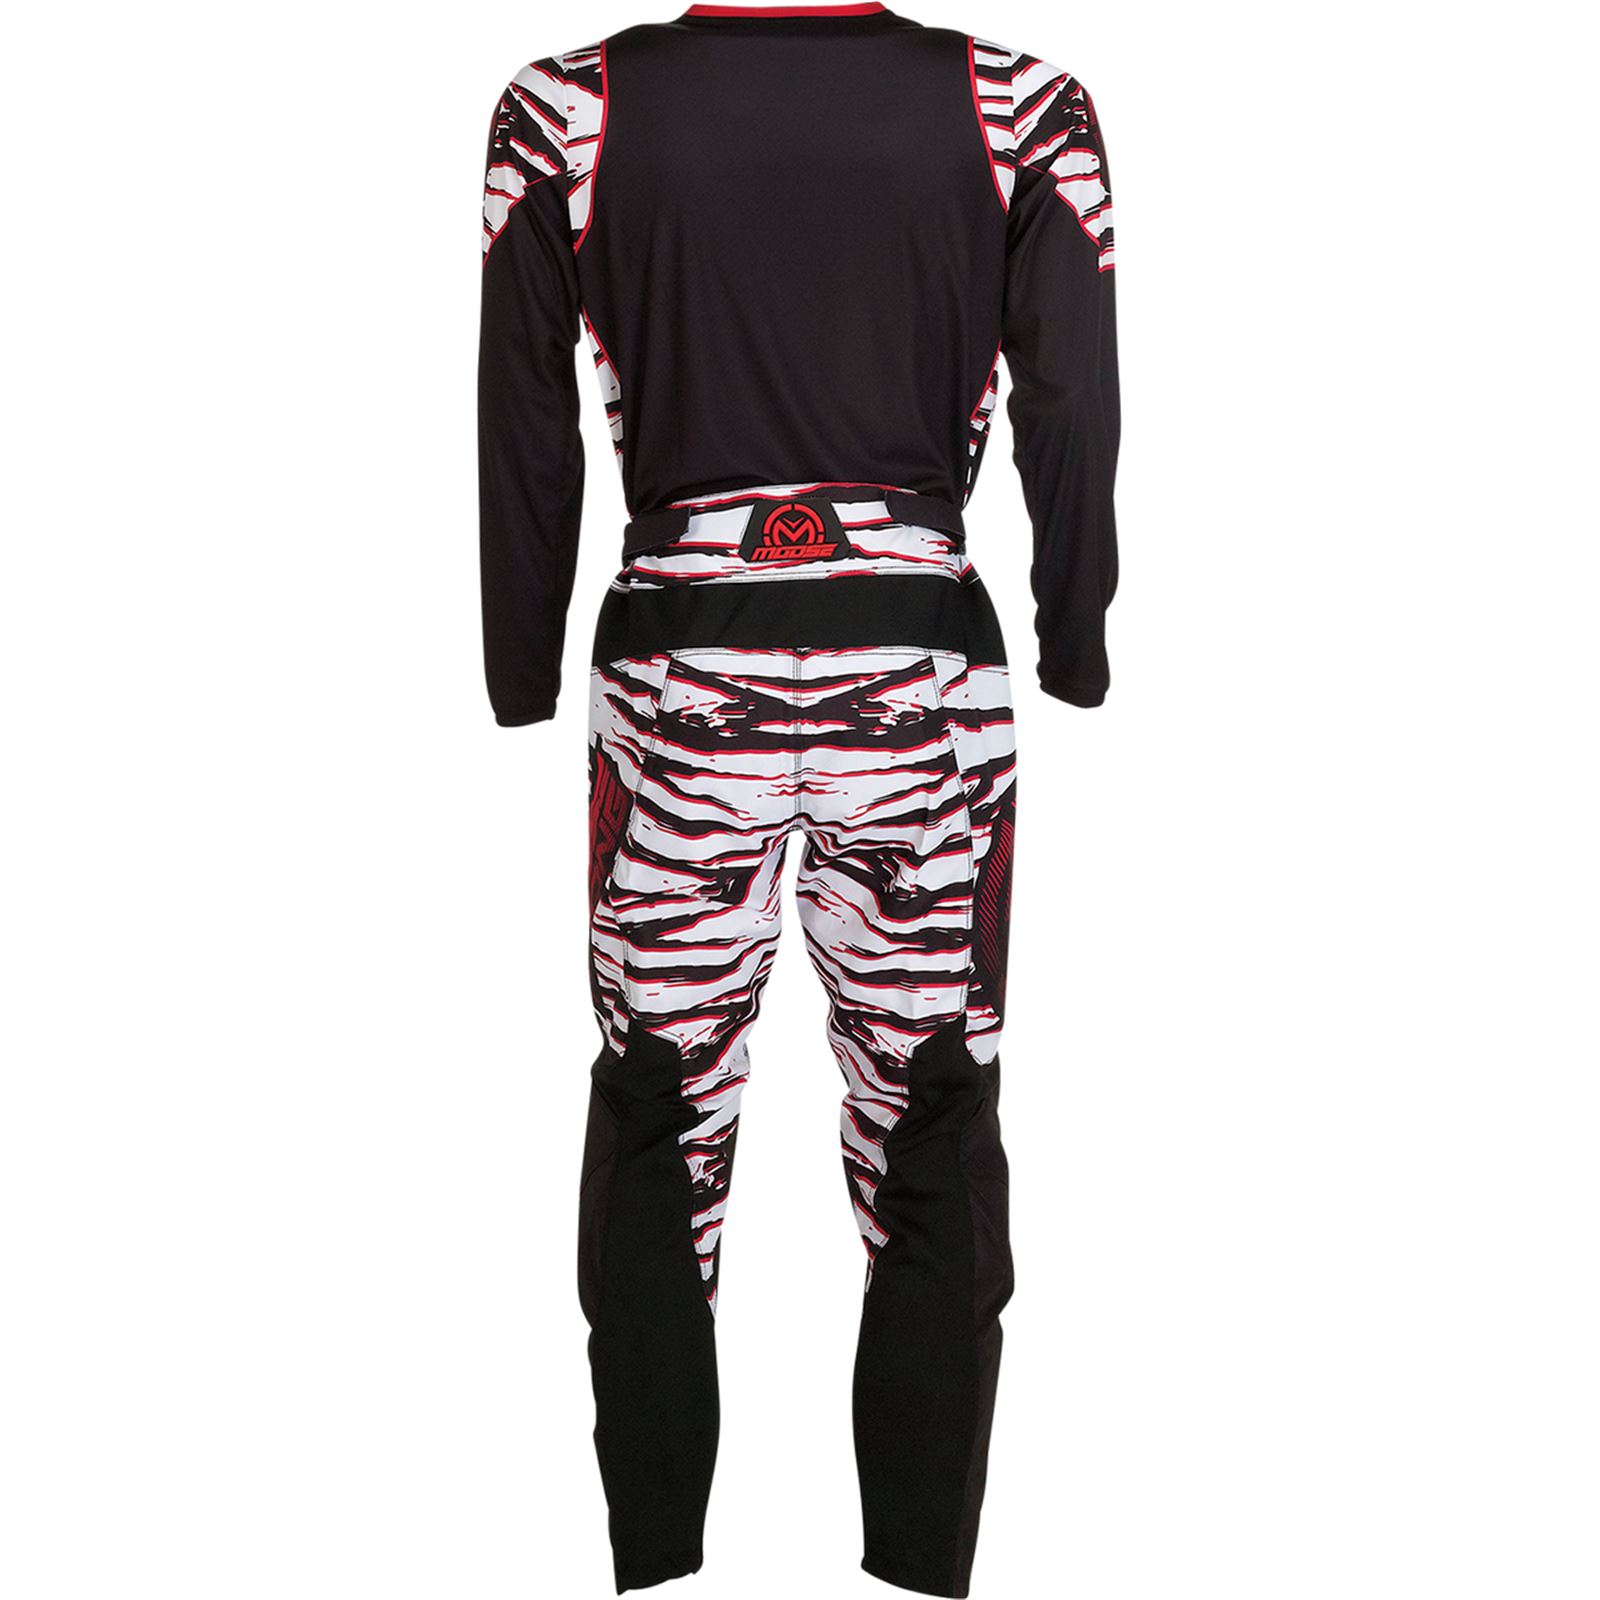 Moose Racing Qualifier Jersey - Black/Red 